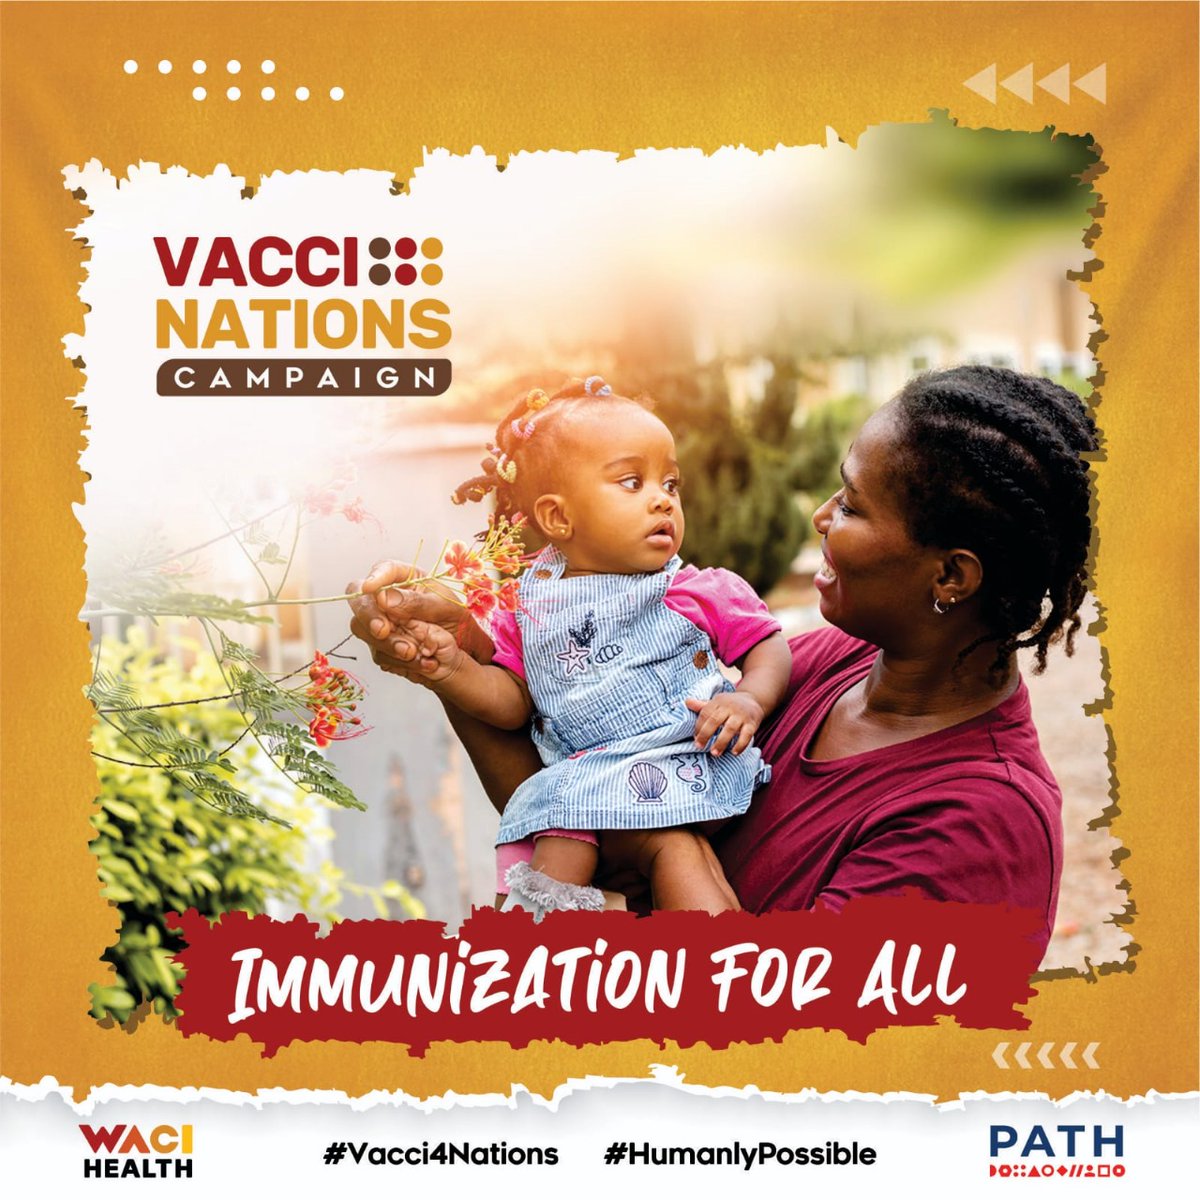 @path @PATHadvocacy @gavi @MTotoNews @WACIHealth @Gloriamululu @WanjikuMerci @QueerSpacKe @ItsKyuleNgao @SaraKe_biya @its_qario @mariahakinyi11 @Shis1Shisia @gavi_csos @jngangaaa @VivianFaith9 Join the webinar as speakers discuss findings on immunization financing in Africa. Let's remember that access to vaccines is a fundamental human right. @gavi_csos @PATH @PATHadvocacy, @WACIHealth @gavi @MTotoNews #Vacci4Nations #HumanlyPossible #WorldImmunizationWeek